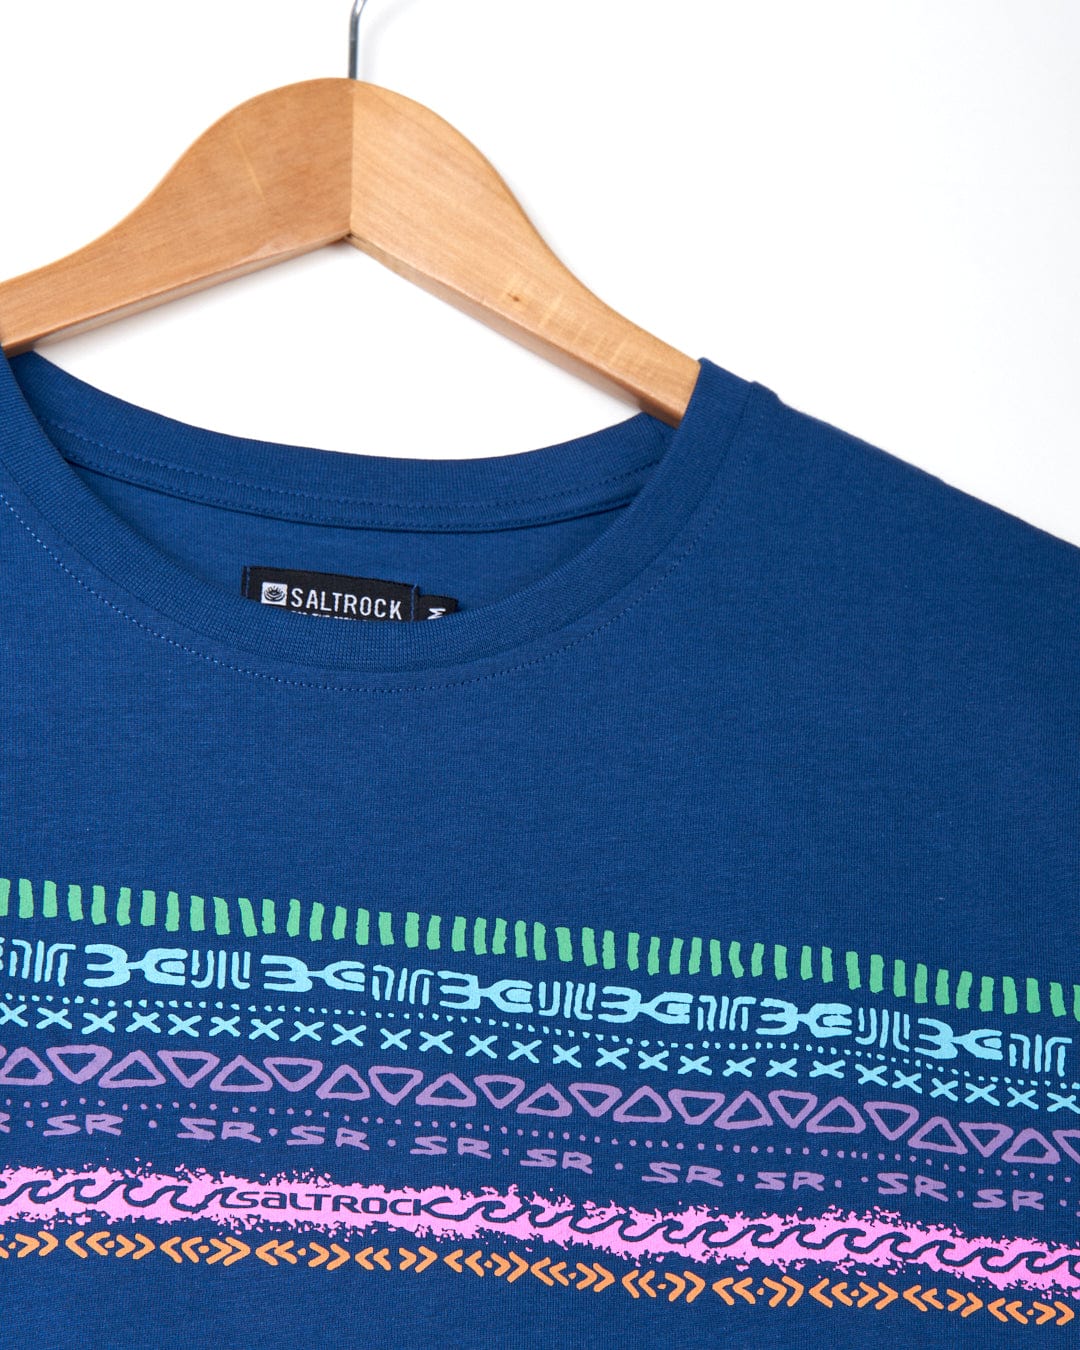 A blue Saltrock Cotton t-shirt with an aztec pattern on it.